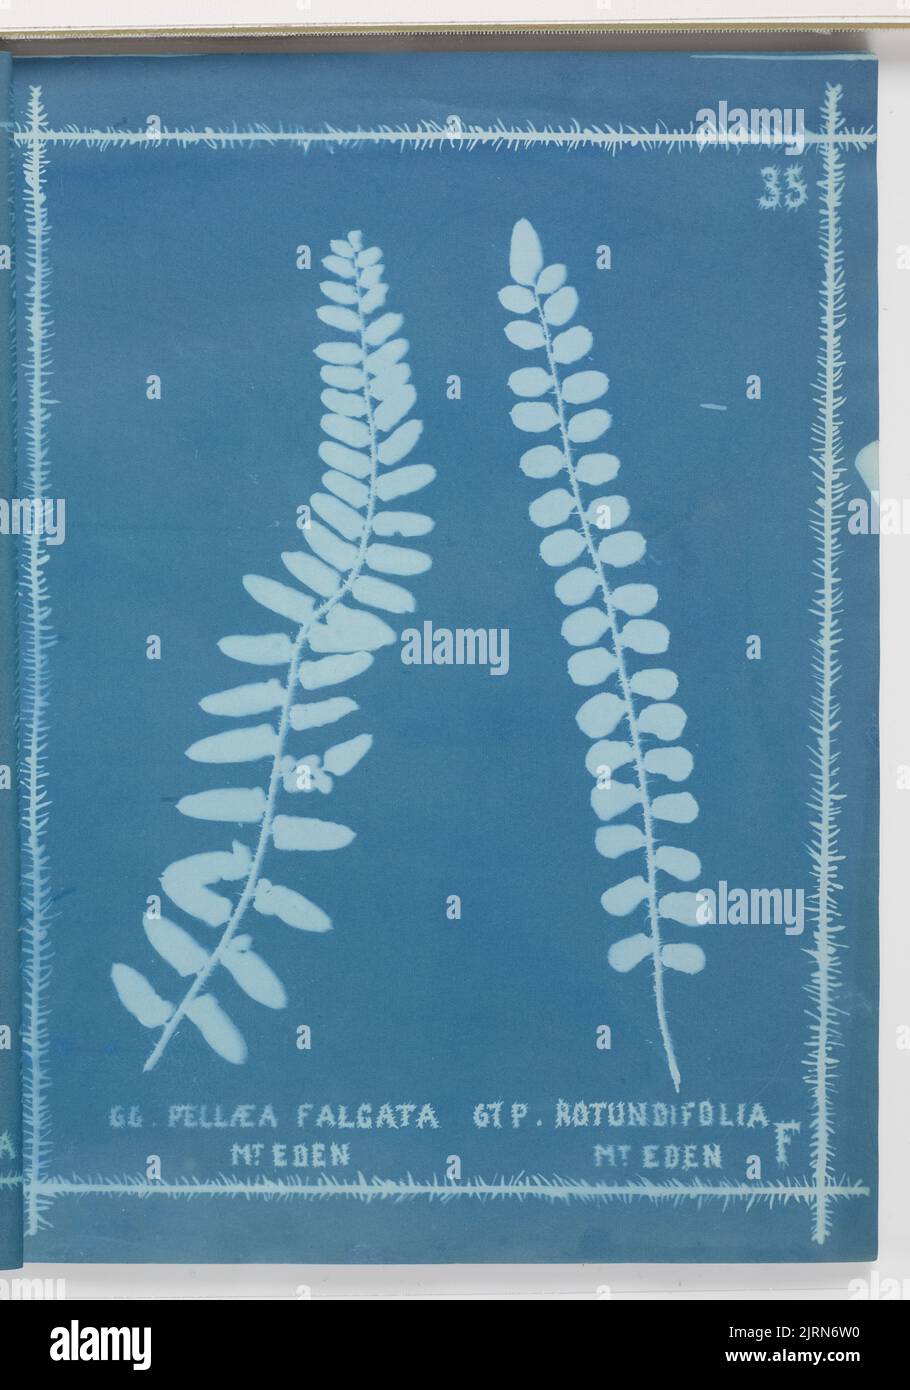 Pellaea falgata, Mount Eden and P. rotundifolia, Mount Eden. From the album: New Zealand ferns. 172 varieties, 1880, Auckland, by Herbert Dobbie. Stock Photo